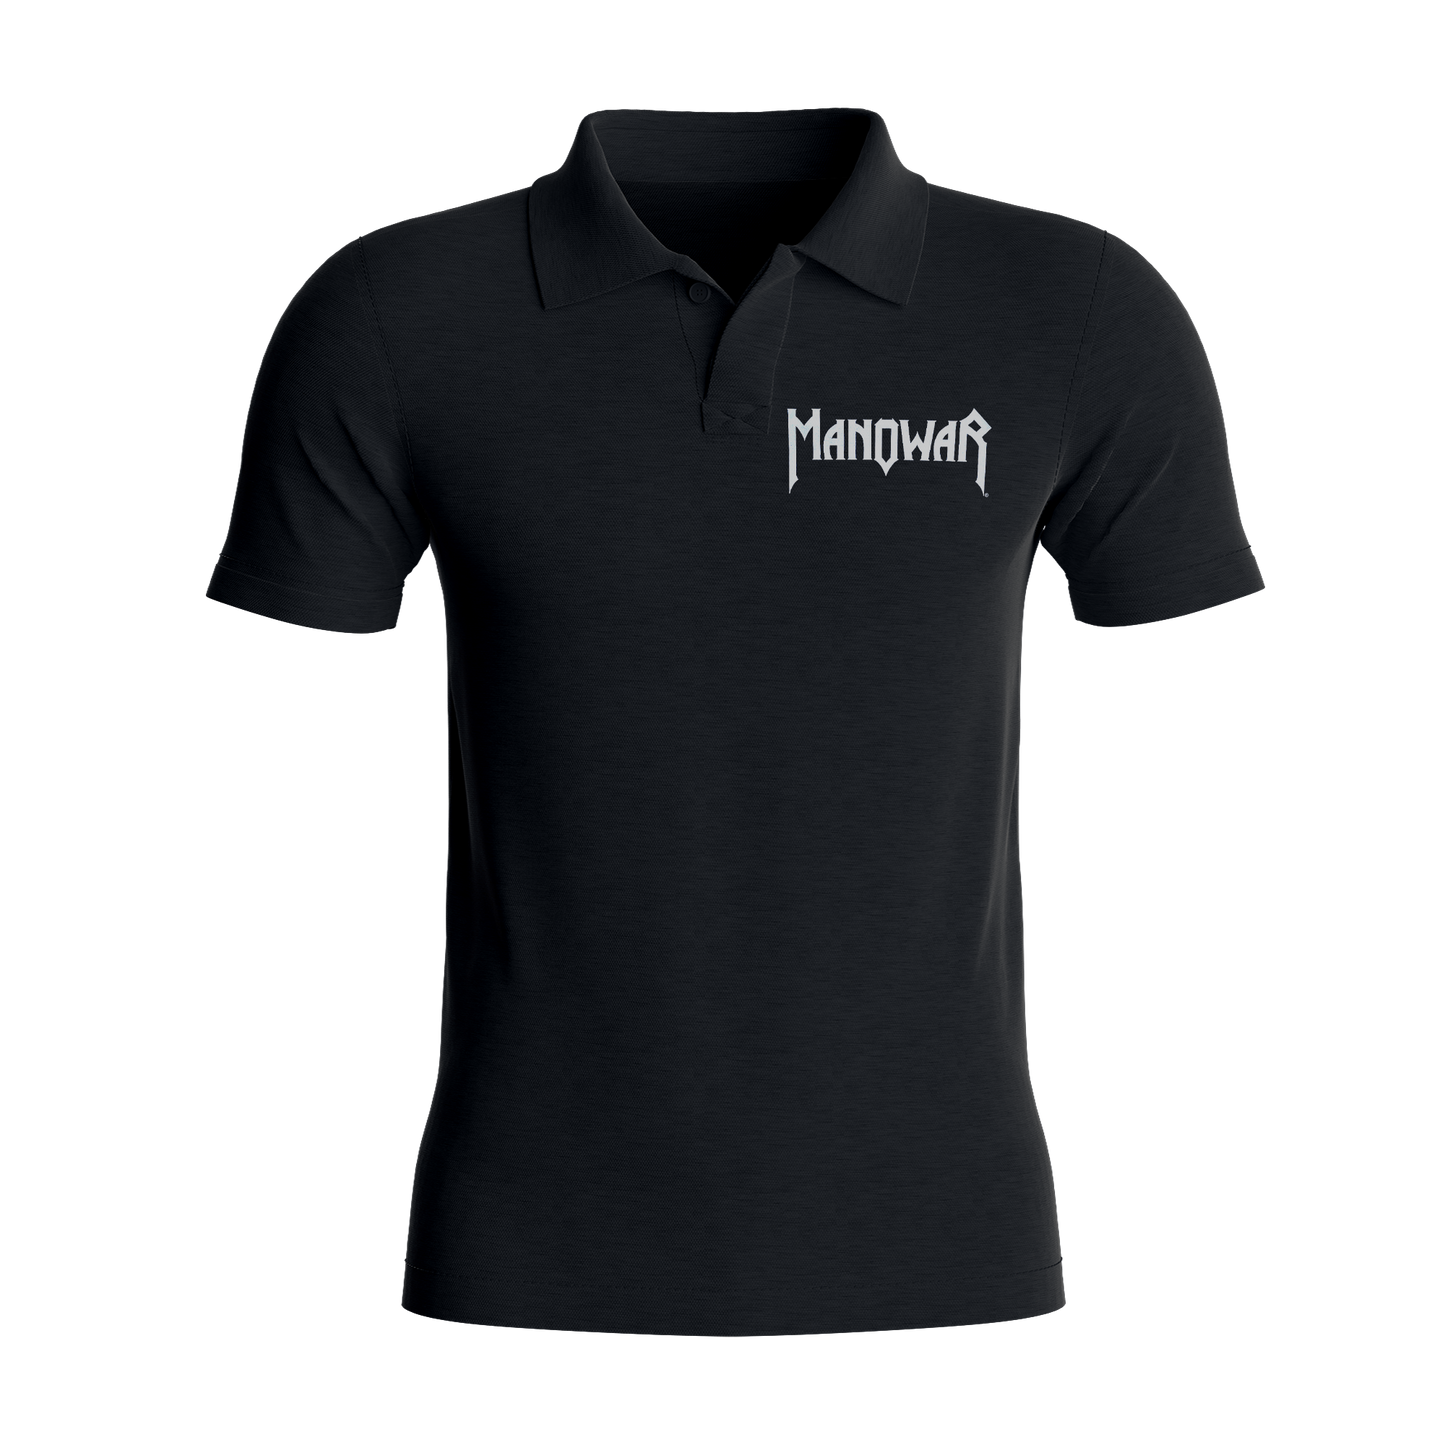 Polo Shirt with MANOWAR logo